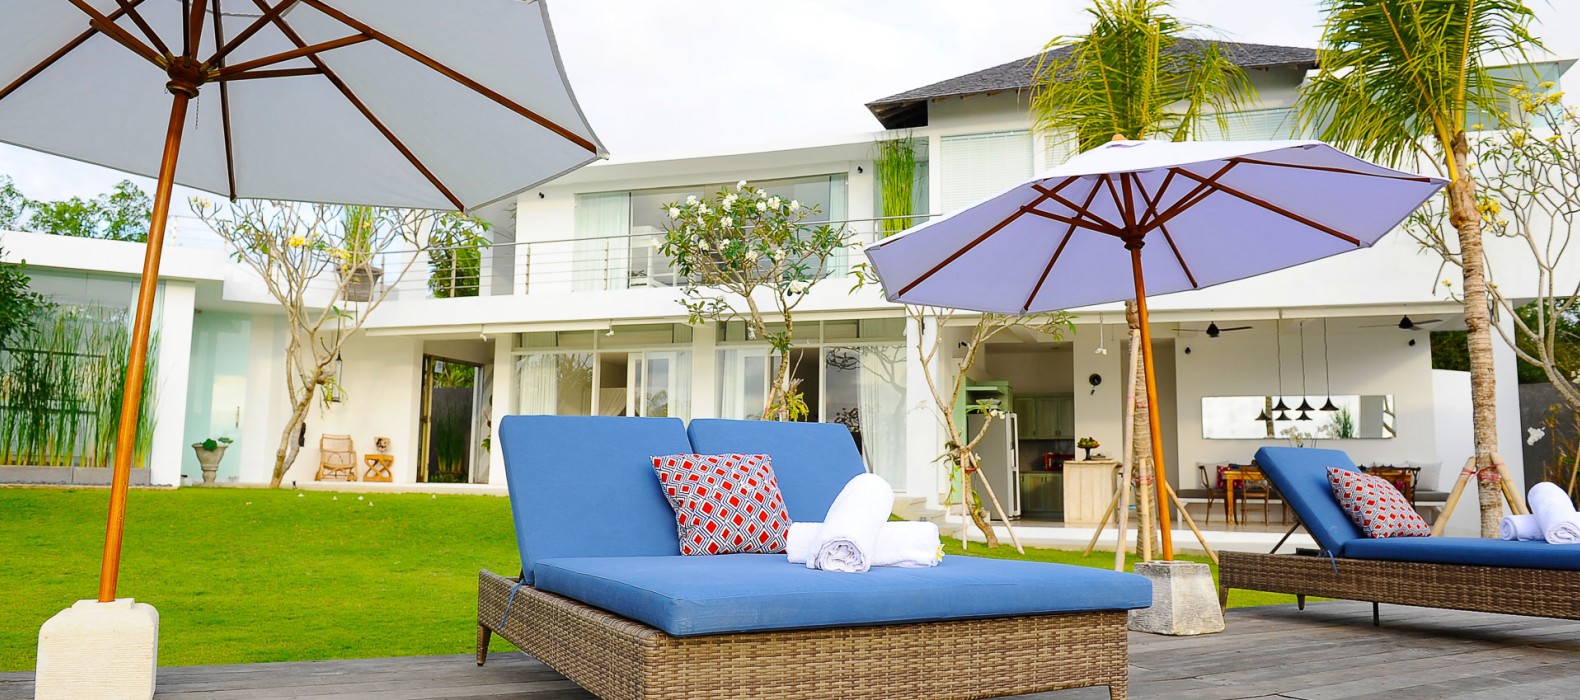 Sun loungers of Villa Solumia in Bali